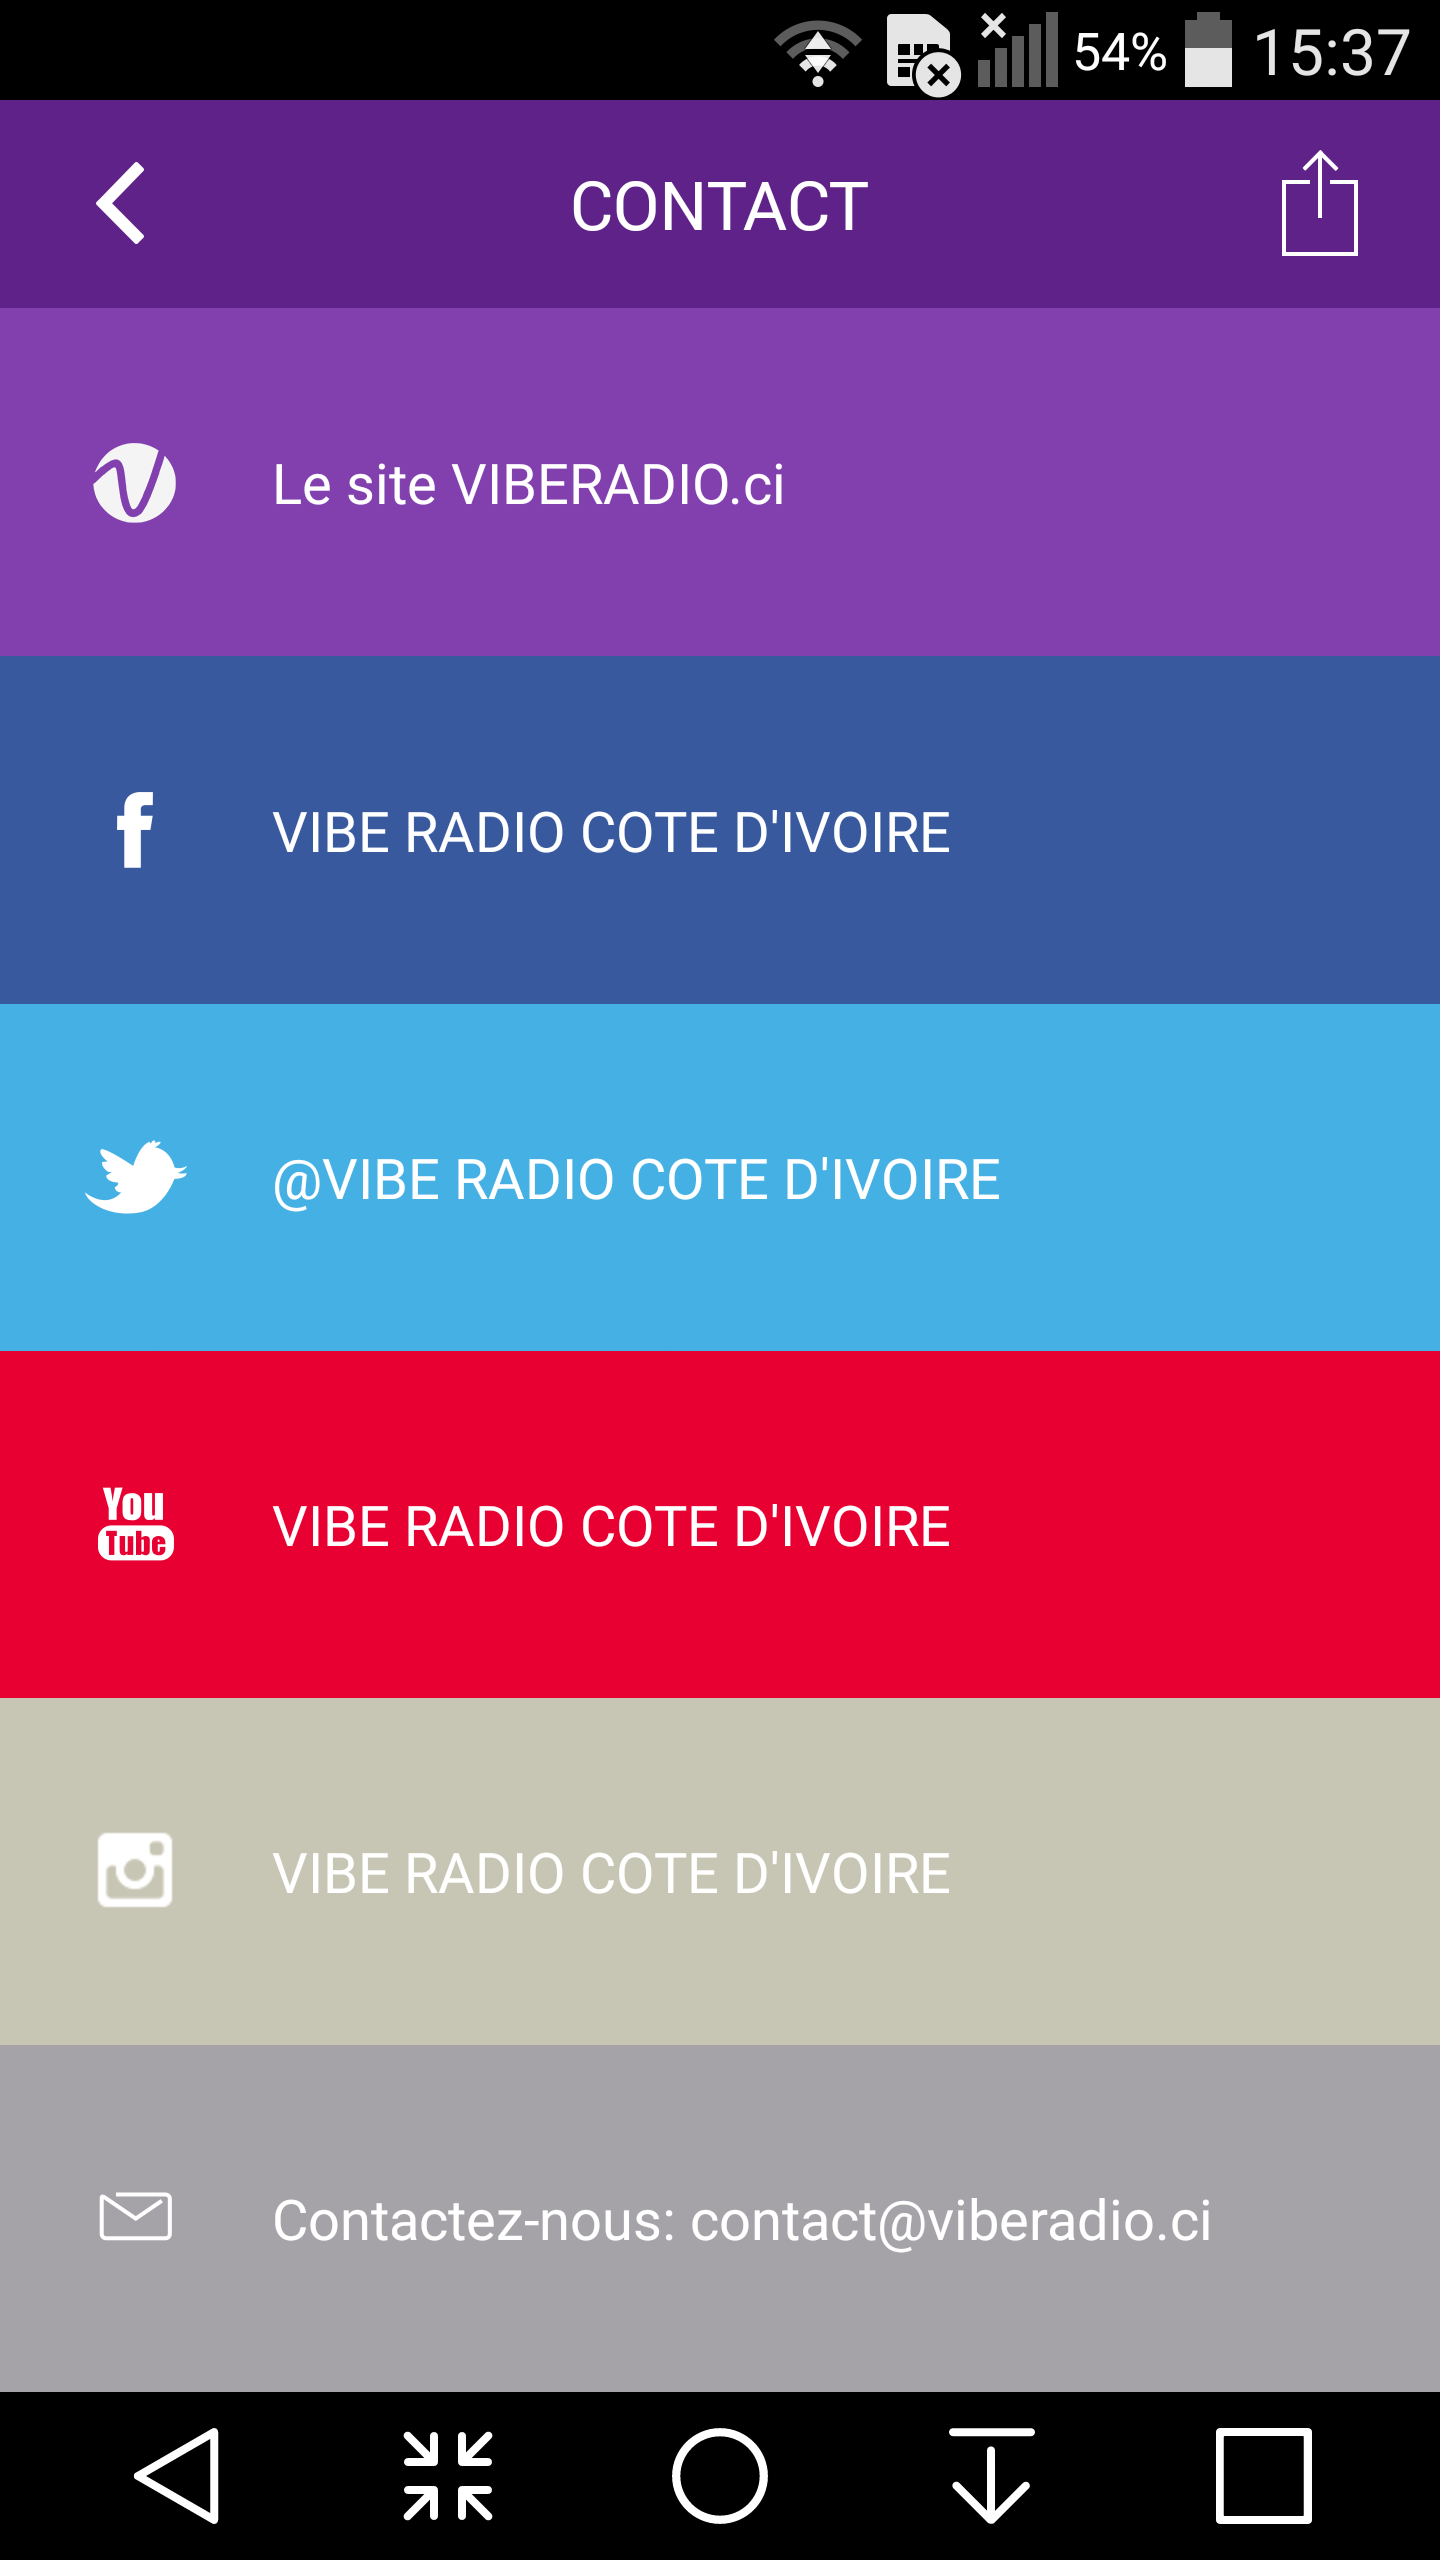 VIBE RADIO COTE D'IVOIRE APK 4.1 for Android – Download VIBE RADIO COTE D' IVOIRE APK Latest Version from APKFab.com